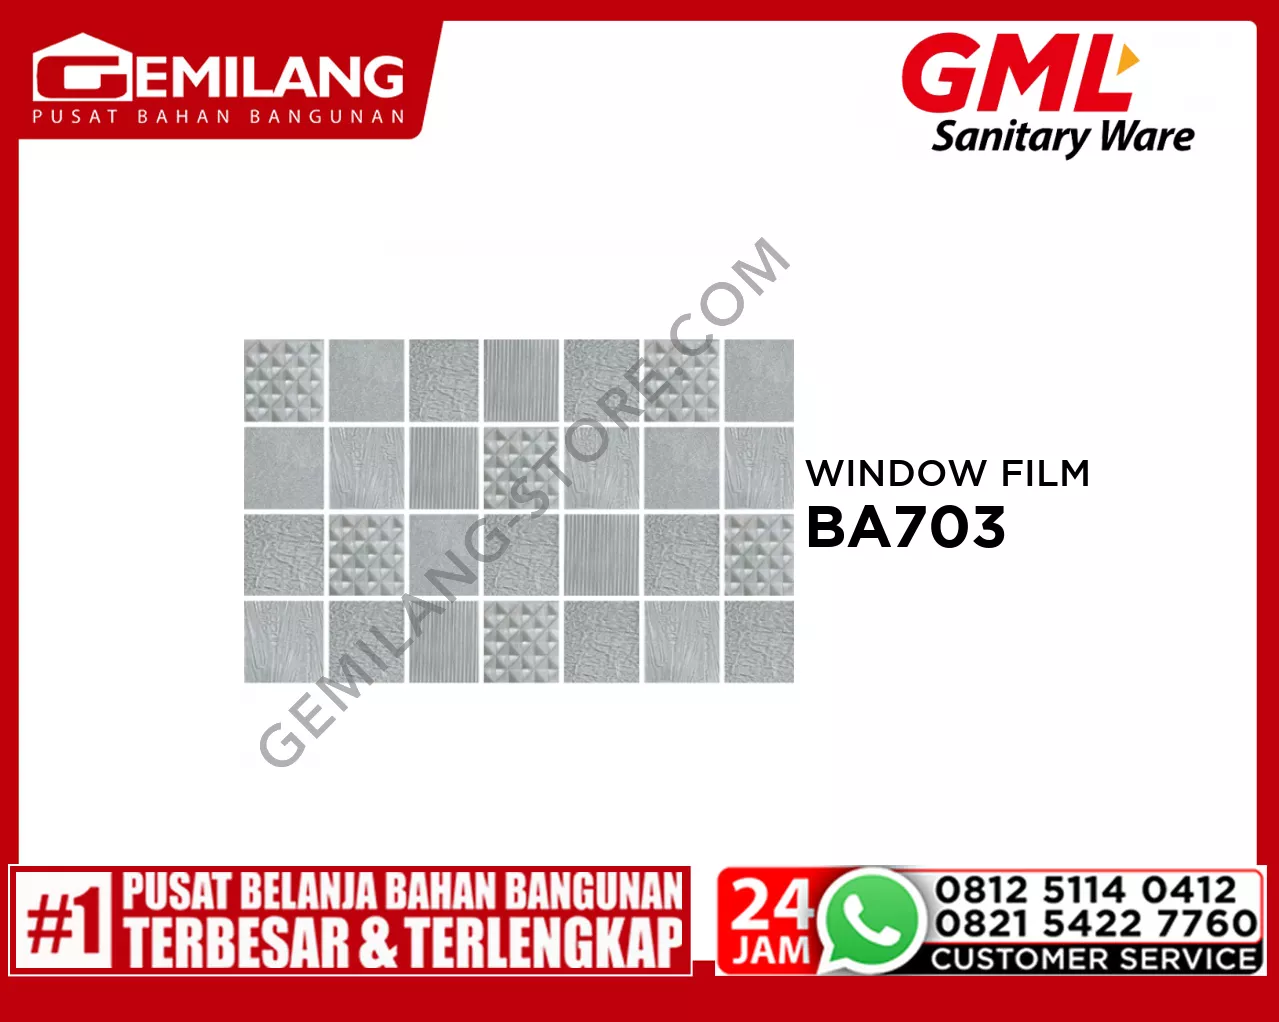 GML 2D STATIC WINDOW FILM BA703 50 x 90cm x 0.18mm